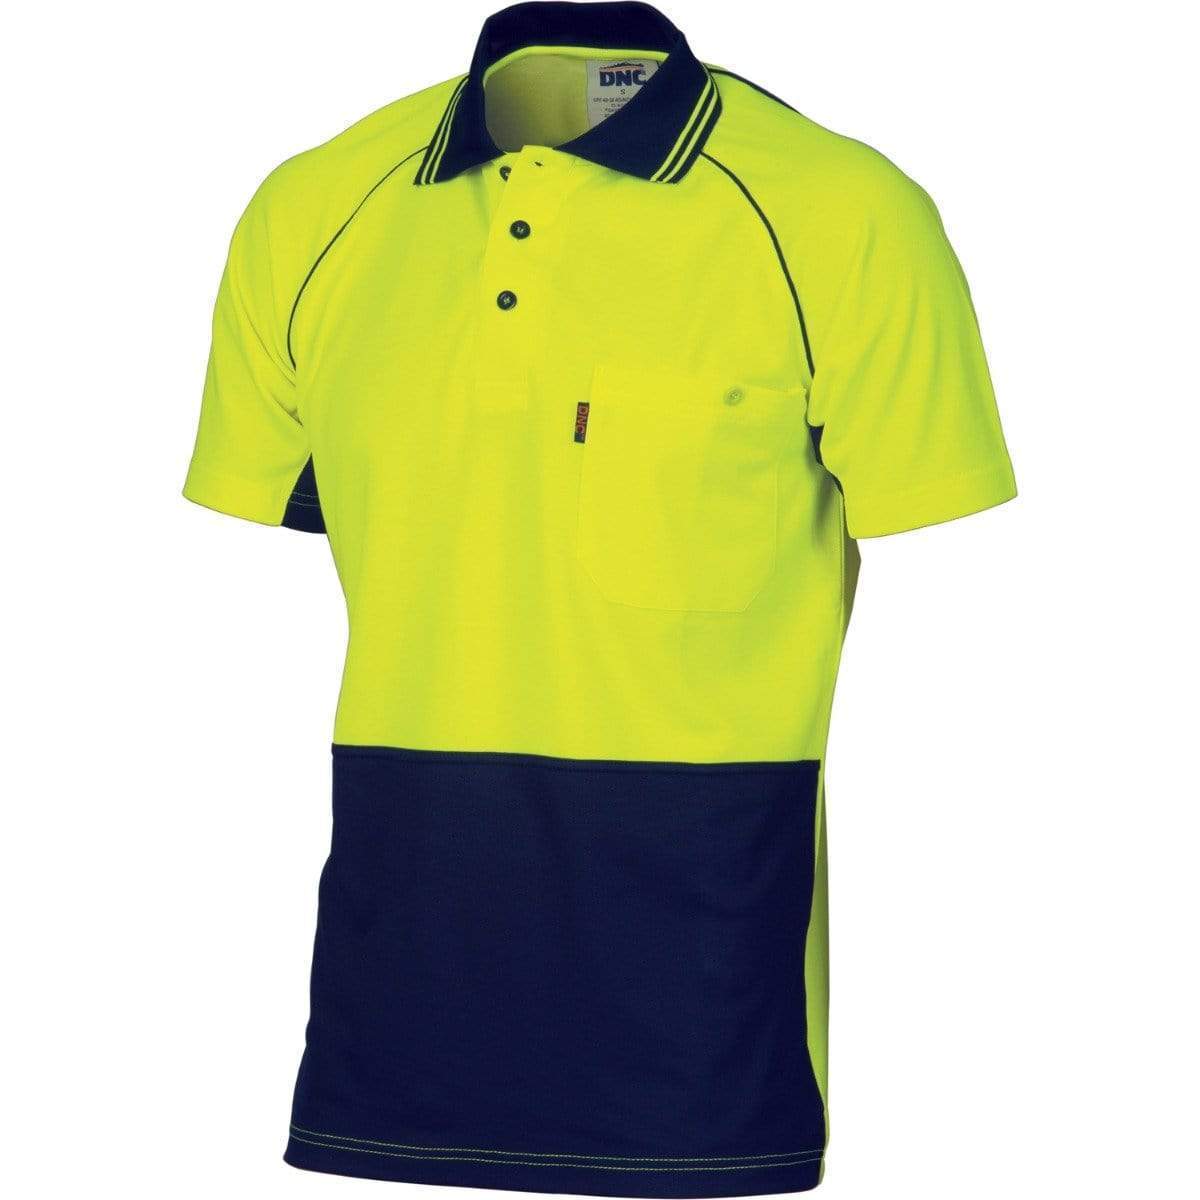 Dnc Workwear Hi-vis Cotton Backed Cool-breeze Contrast Short Sleeve Polo - 3719 Work Wear DNC Workwear Yellow/Navy 2XL 